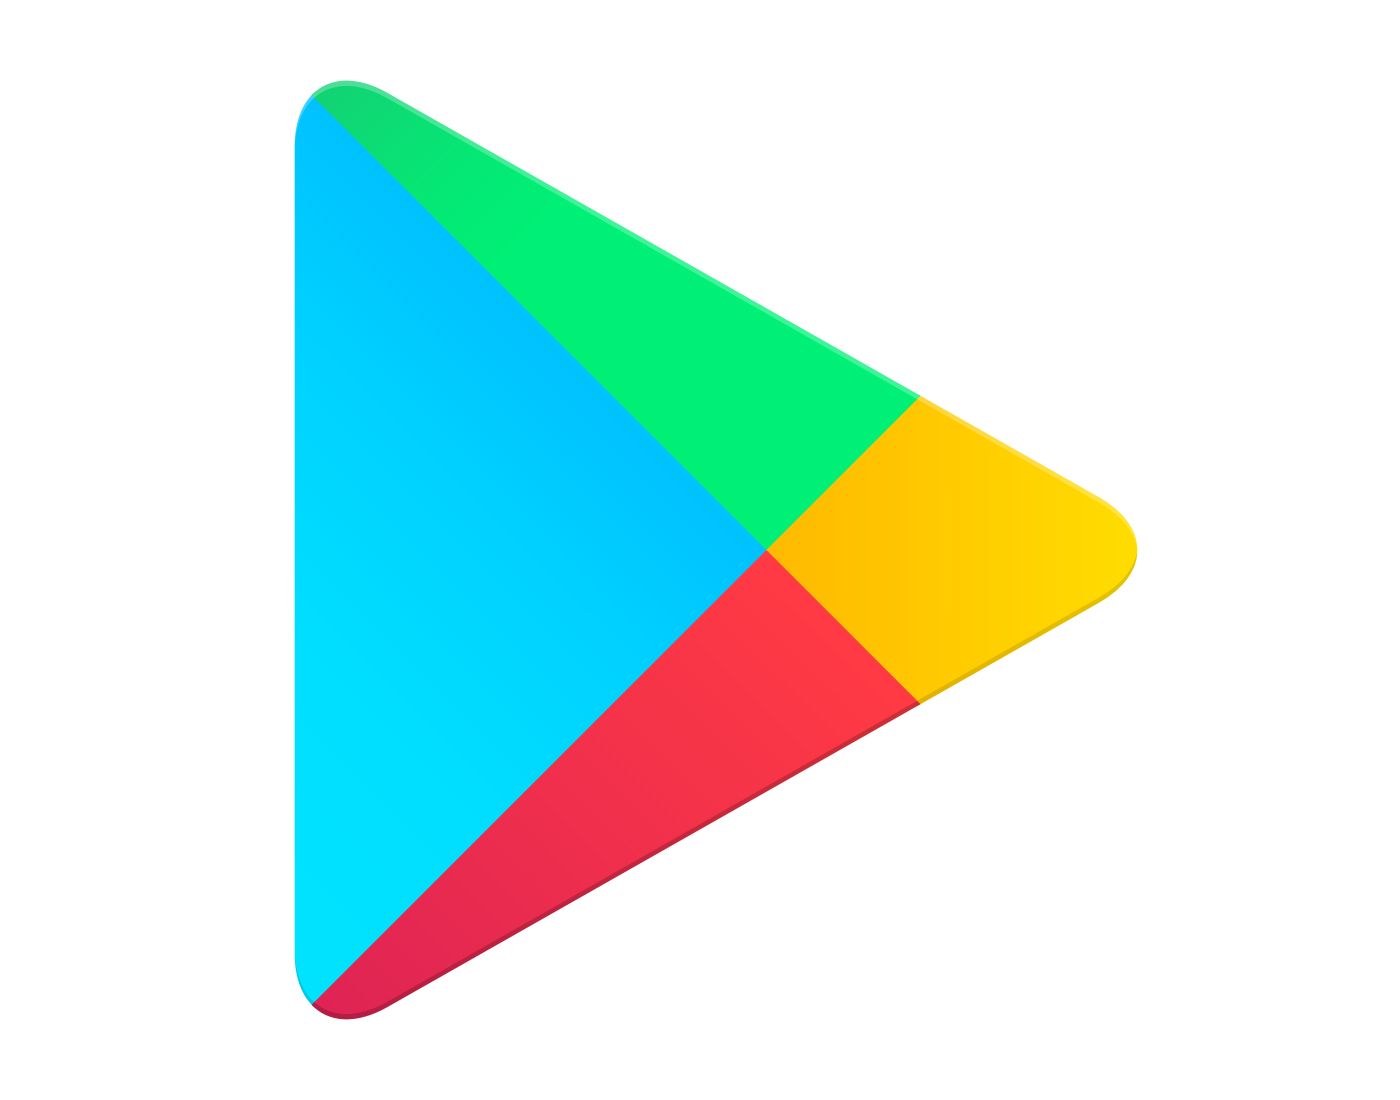 تحميل جوجل بلاي 2022: Google Play Store v29.6.15-21 apk [متجر اندرويد للتطبيقات والألعاب] أحدث إصدار 2022